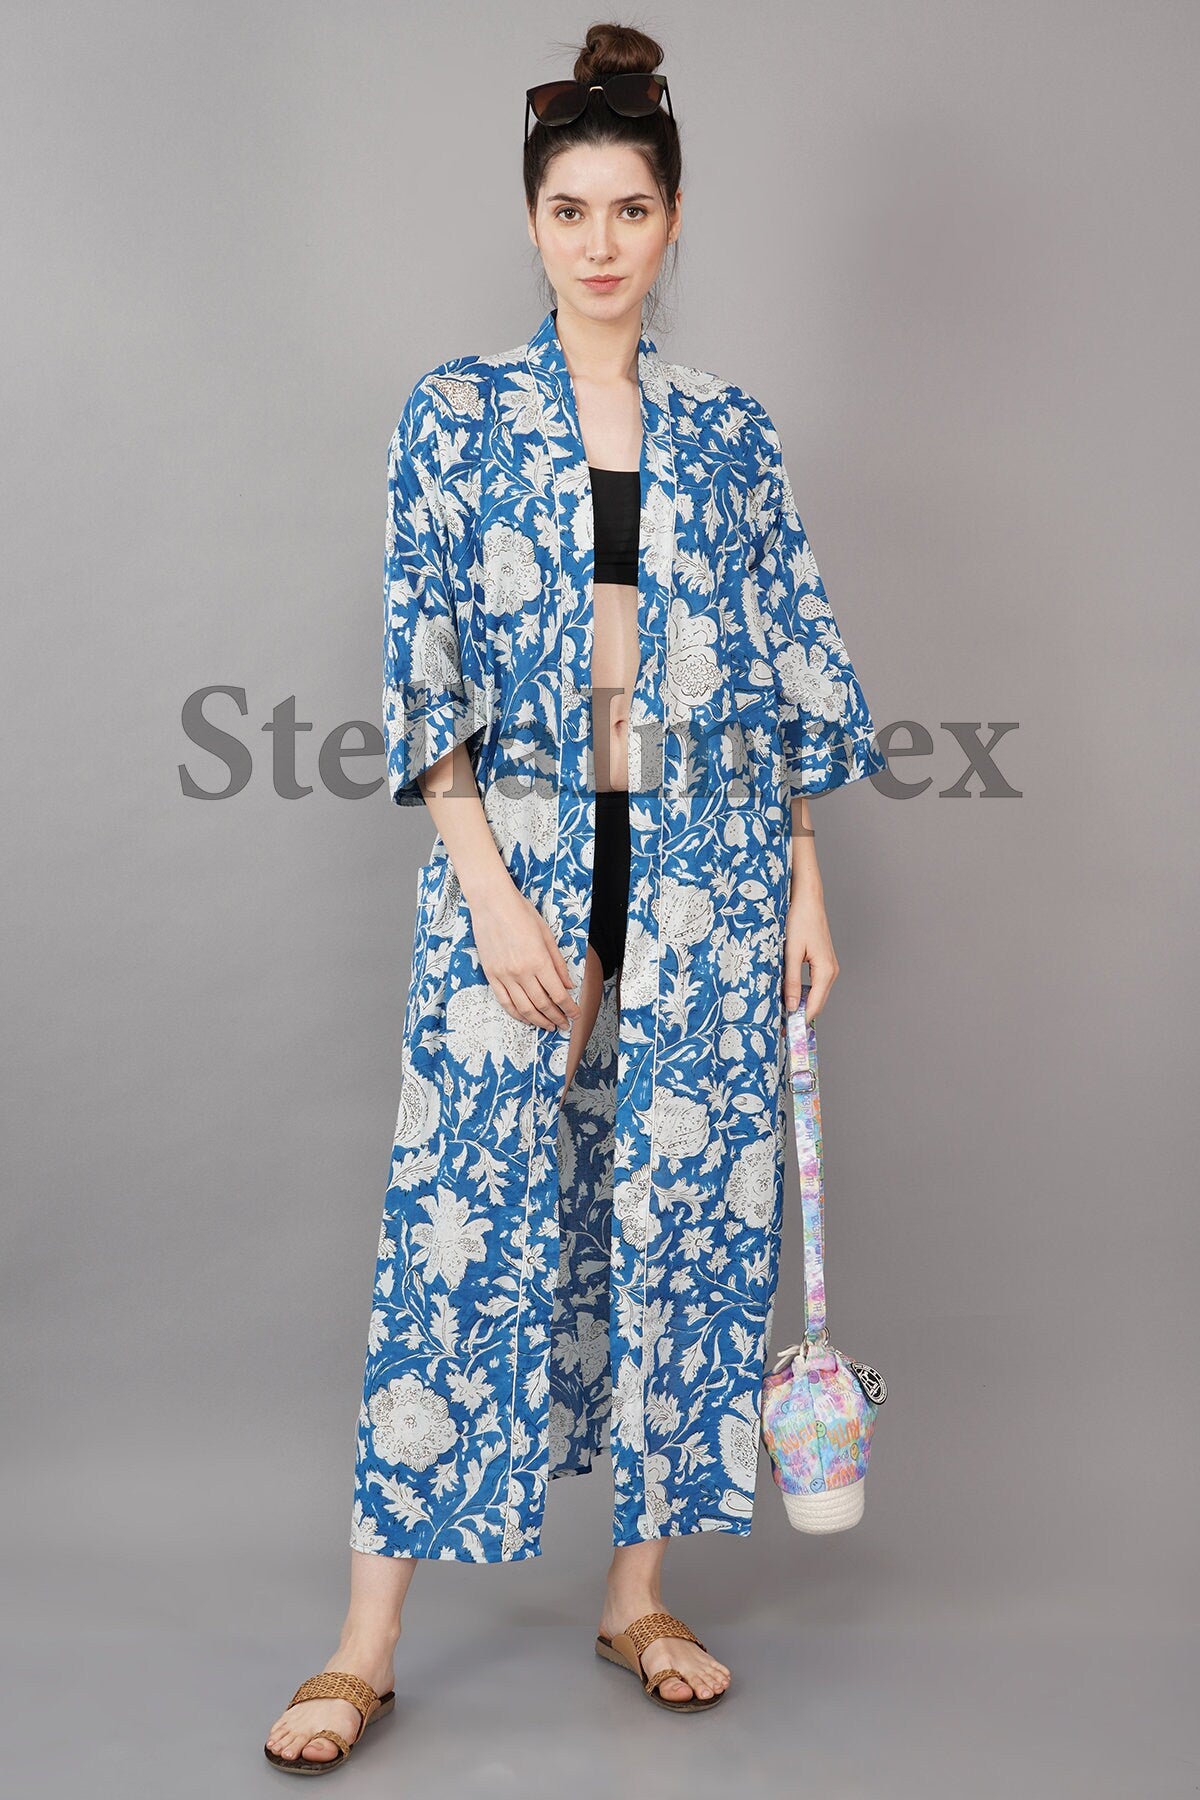 Indian Handmade Cotton Kimono Elegant Blue & White Floral Bathrobe Resort Wear Beach Bikini Cover-ups Boho Kimono Bathrobe, Gift for Her